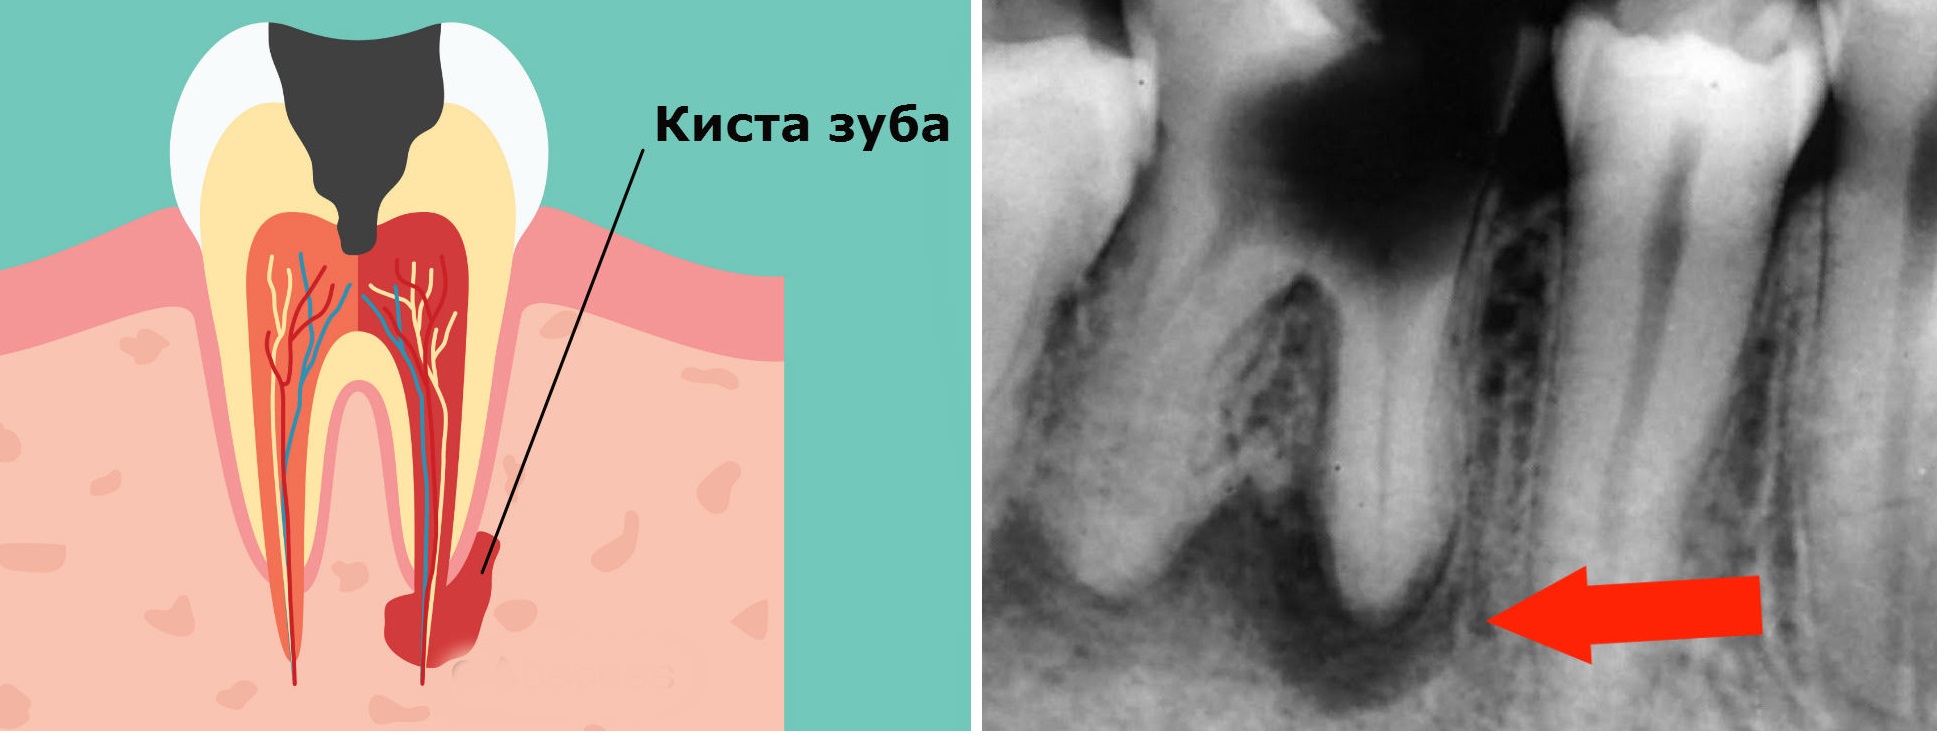 Опасна ли киста зуба